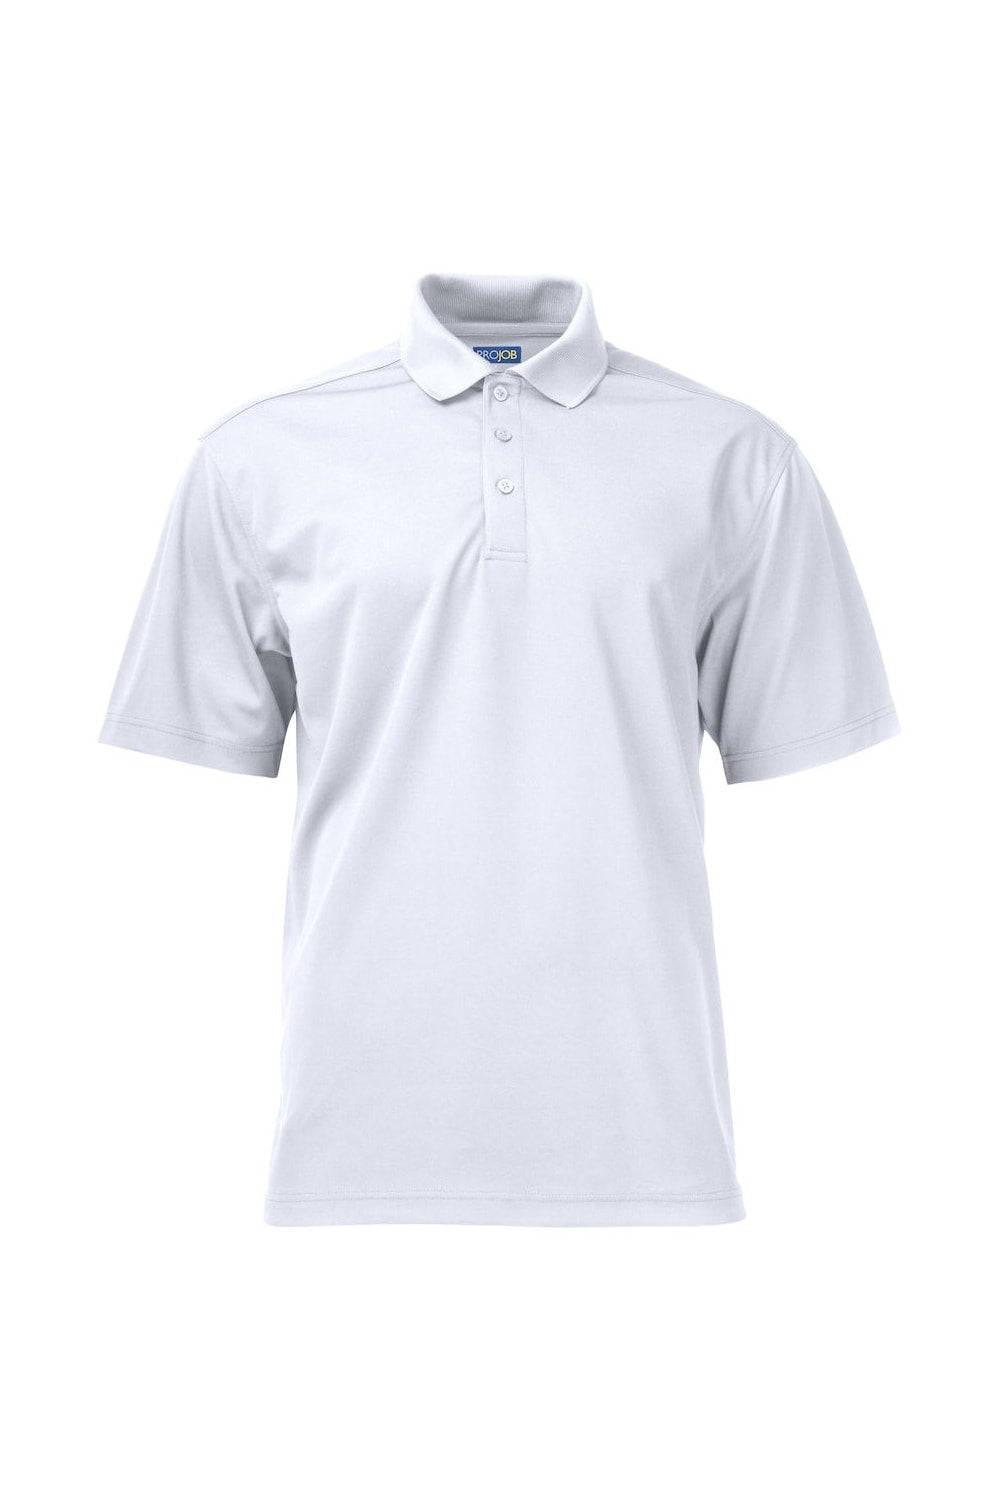 Mens Pique Polo Shirt - White